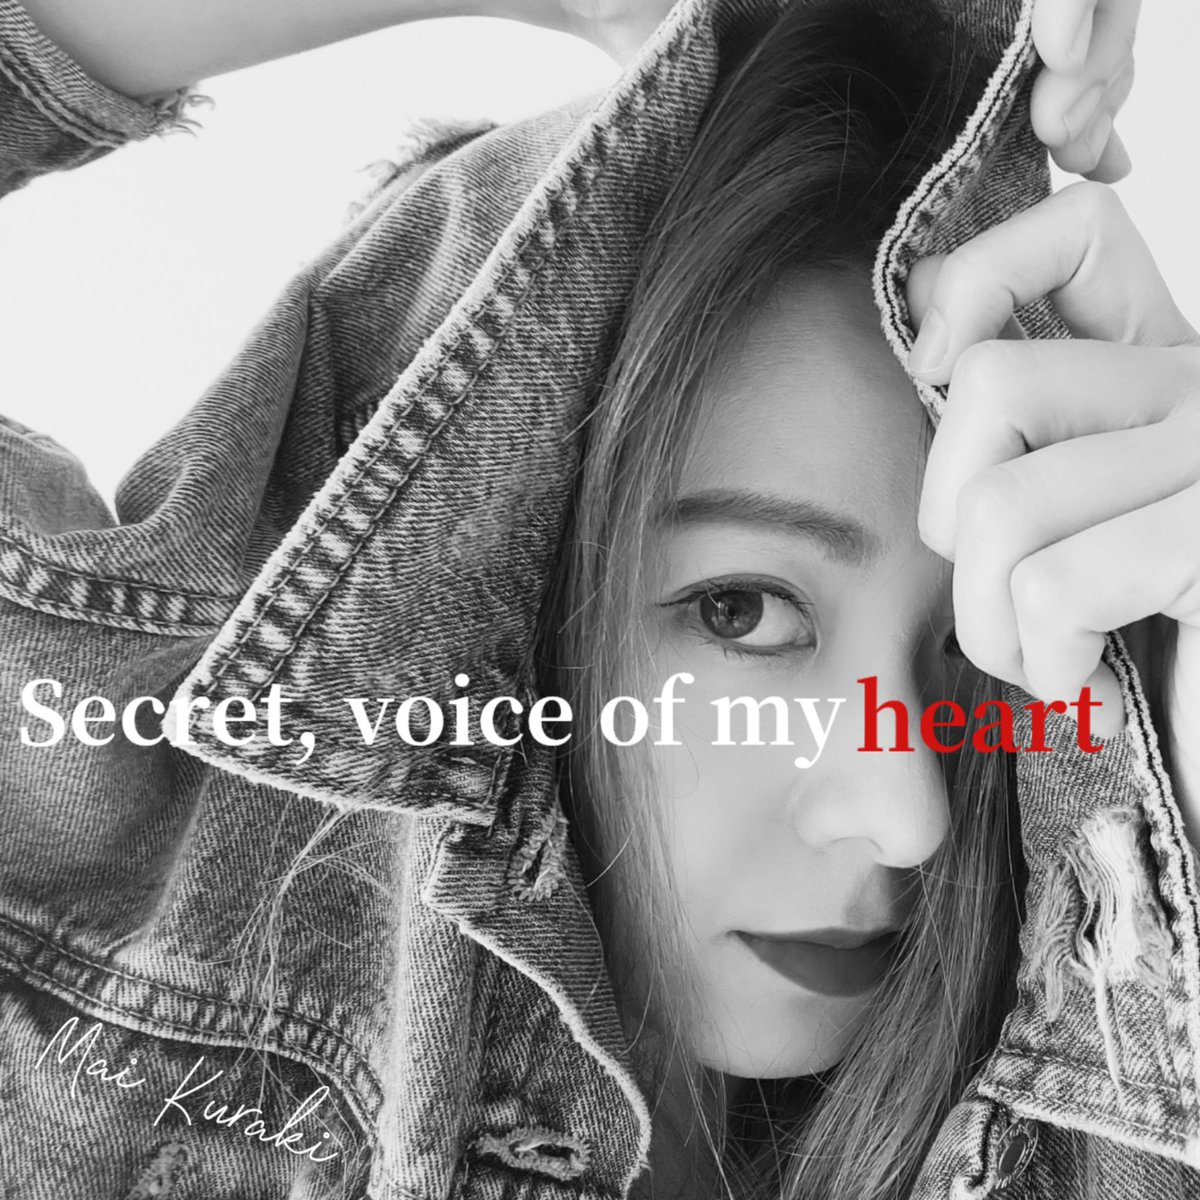 『倉木麻衣 - Secret, voice of my heart』収録の『Secret, voice of my heart』ジャケット